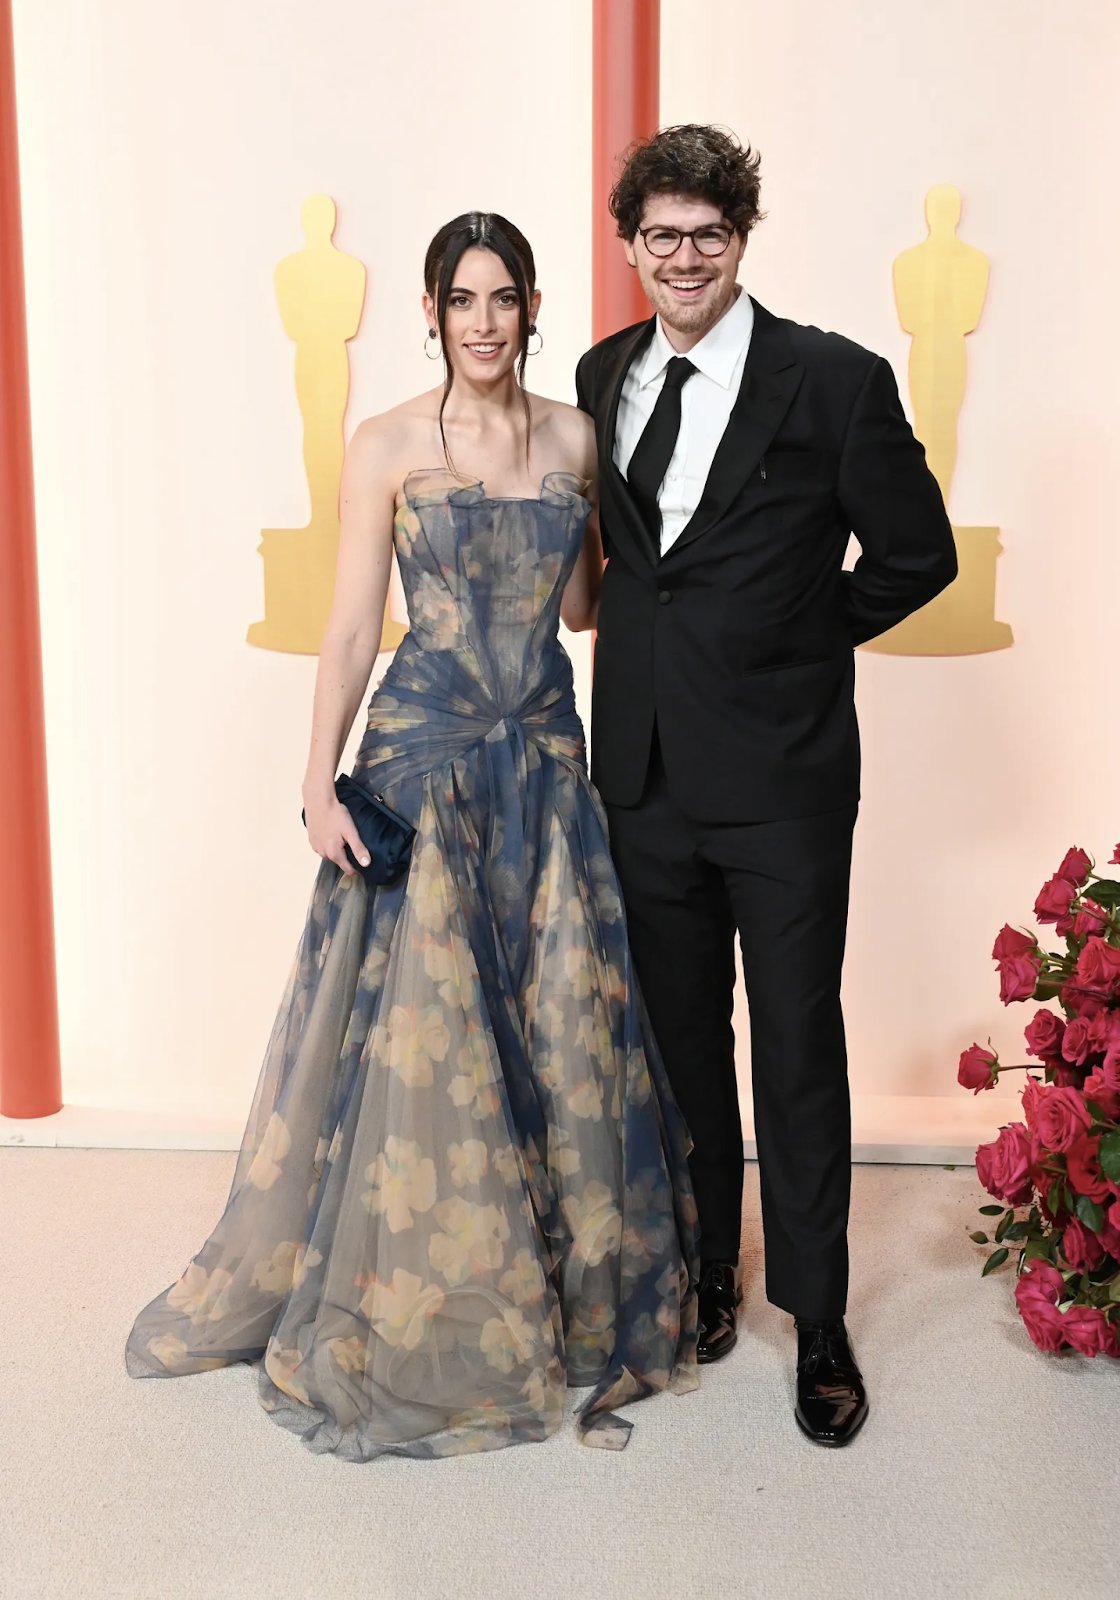 Syrian Refugee Seeks Oscars Red Carpet Dress – The Hollywood Reporter